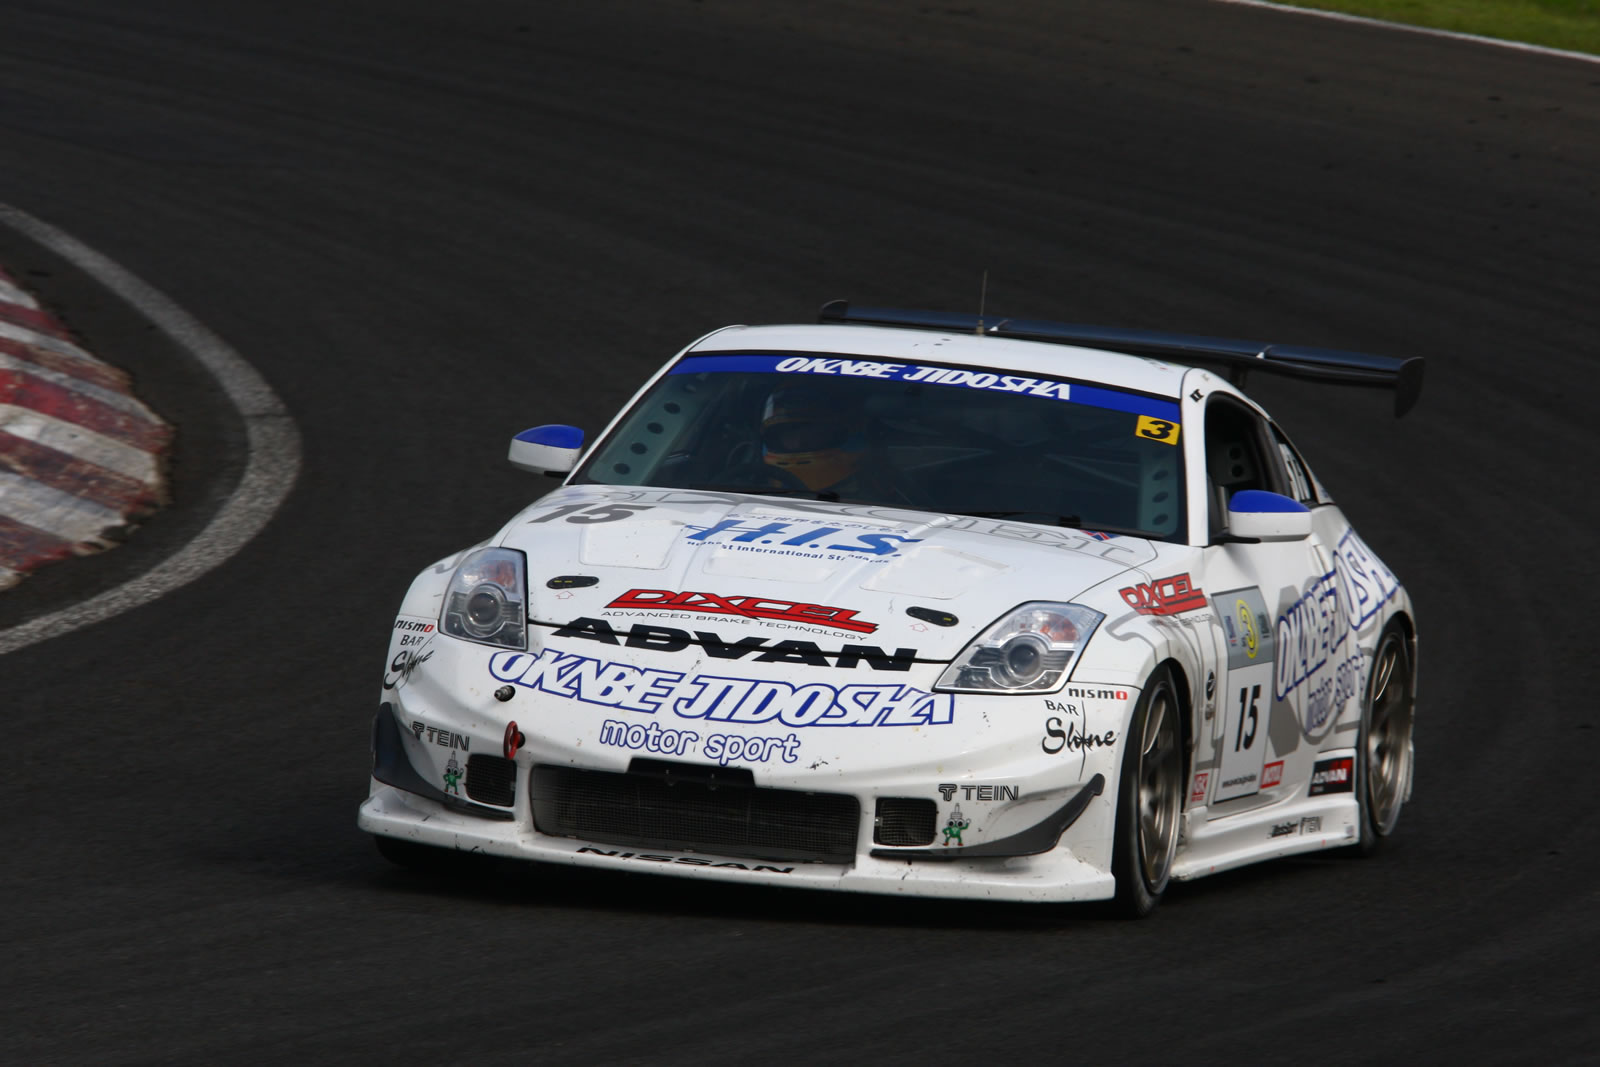 Igor Sushko in the #15 Okabe Jidosha Nissan Fairlady Z in Super Taikyu at 2008 Sendai Hiland 4HR race.